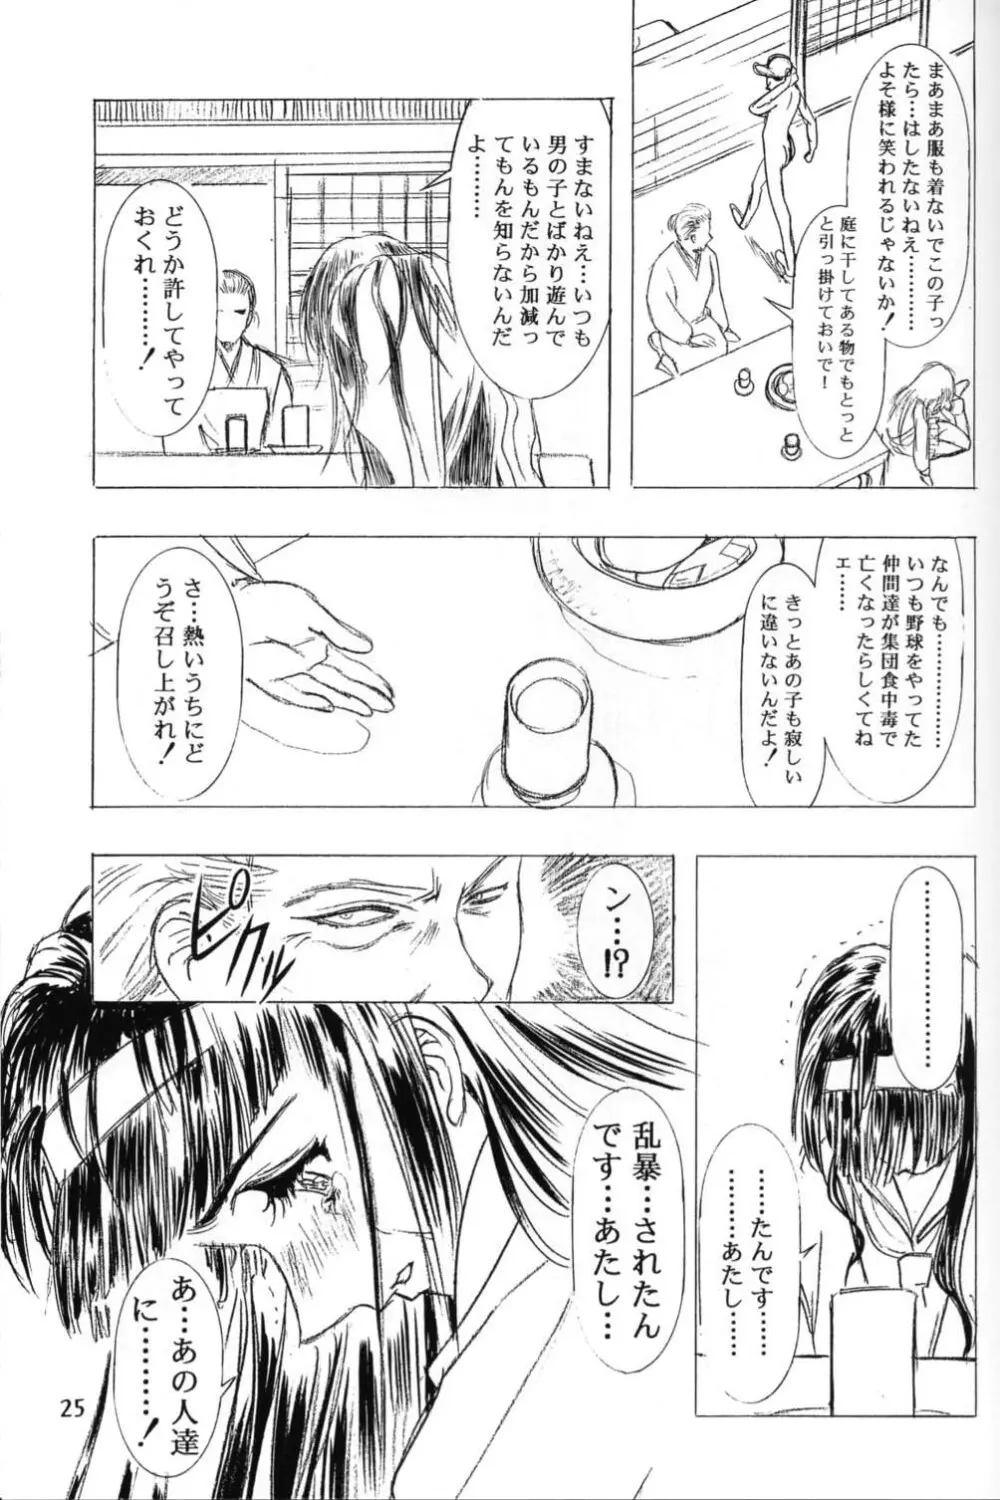 Sakura Ame 2.5 24ページ